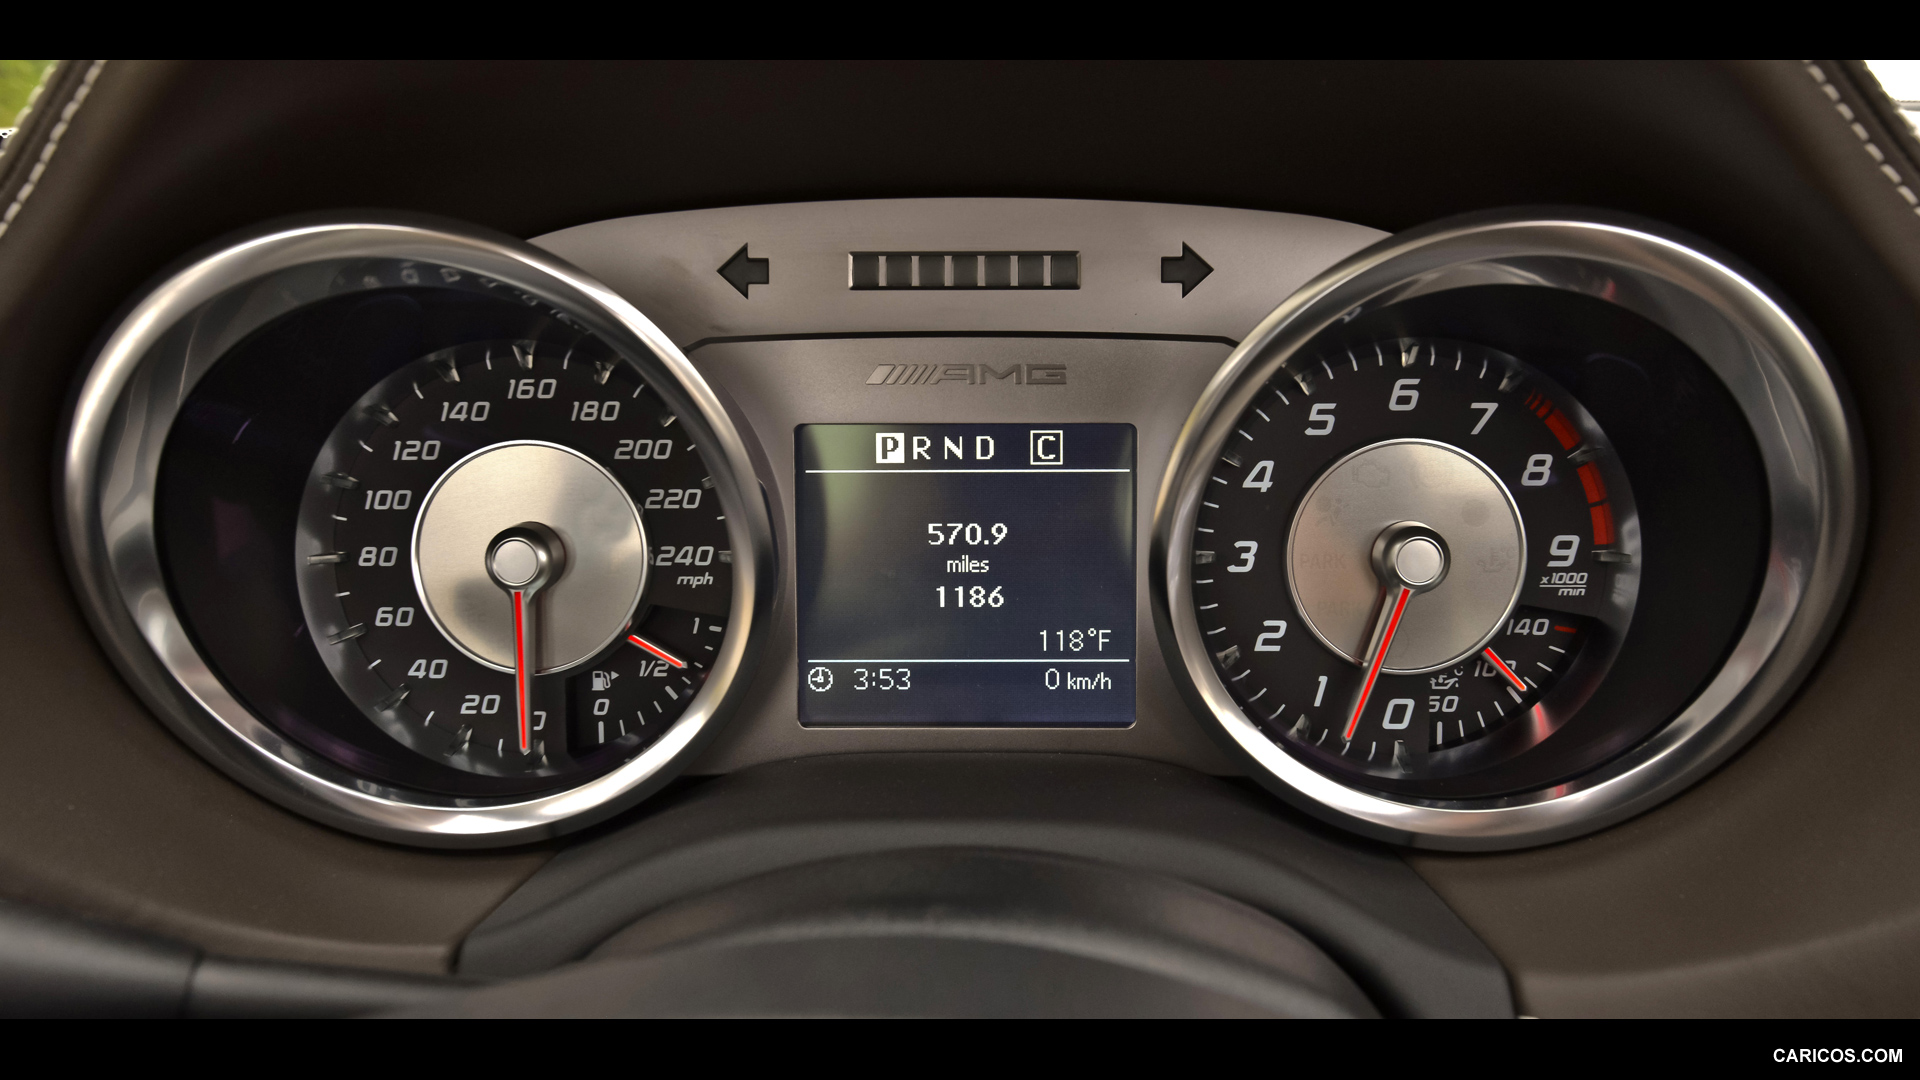 2013 Mercedes-Benz SLS AMG GT Roadster designo Mystic White Instrument Cluster - Interior Detail, #160 of 208